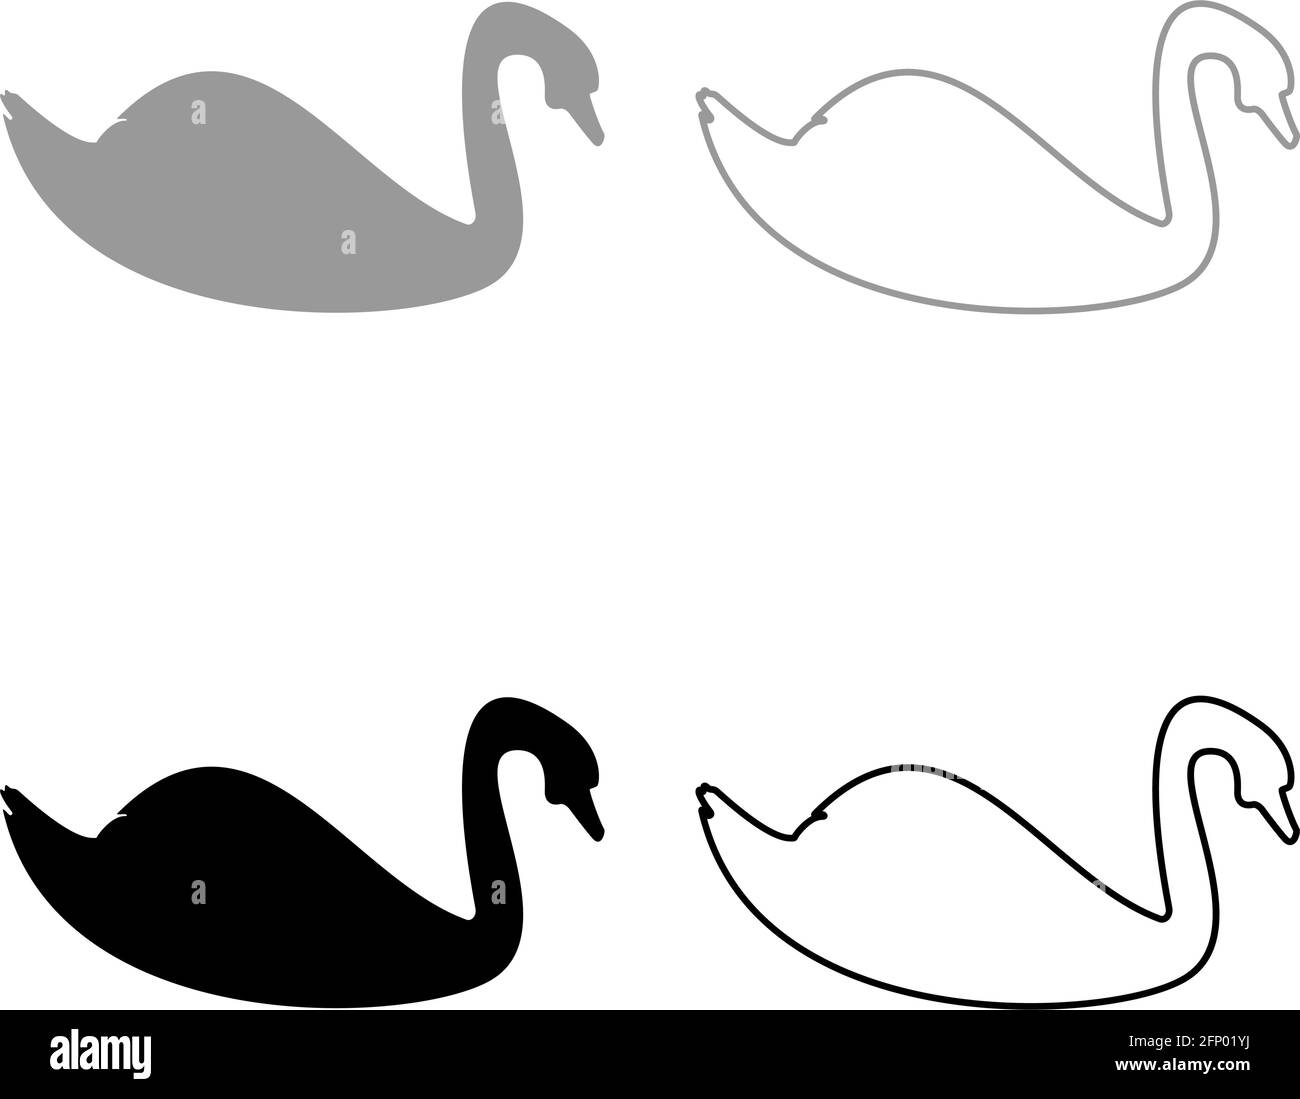 Swan Vogel Wasservögel Silhouette grau schwarz Farbe Vektor Illustration massiv Einfaches Bild im Umrissstil Stock Vektor